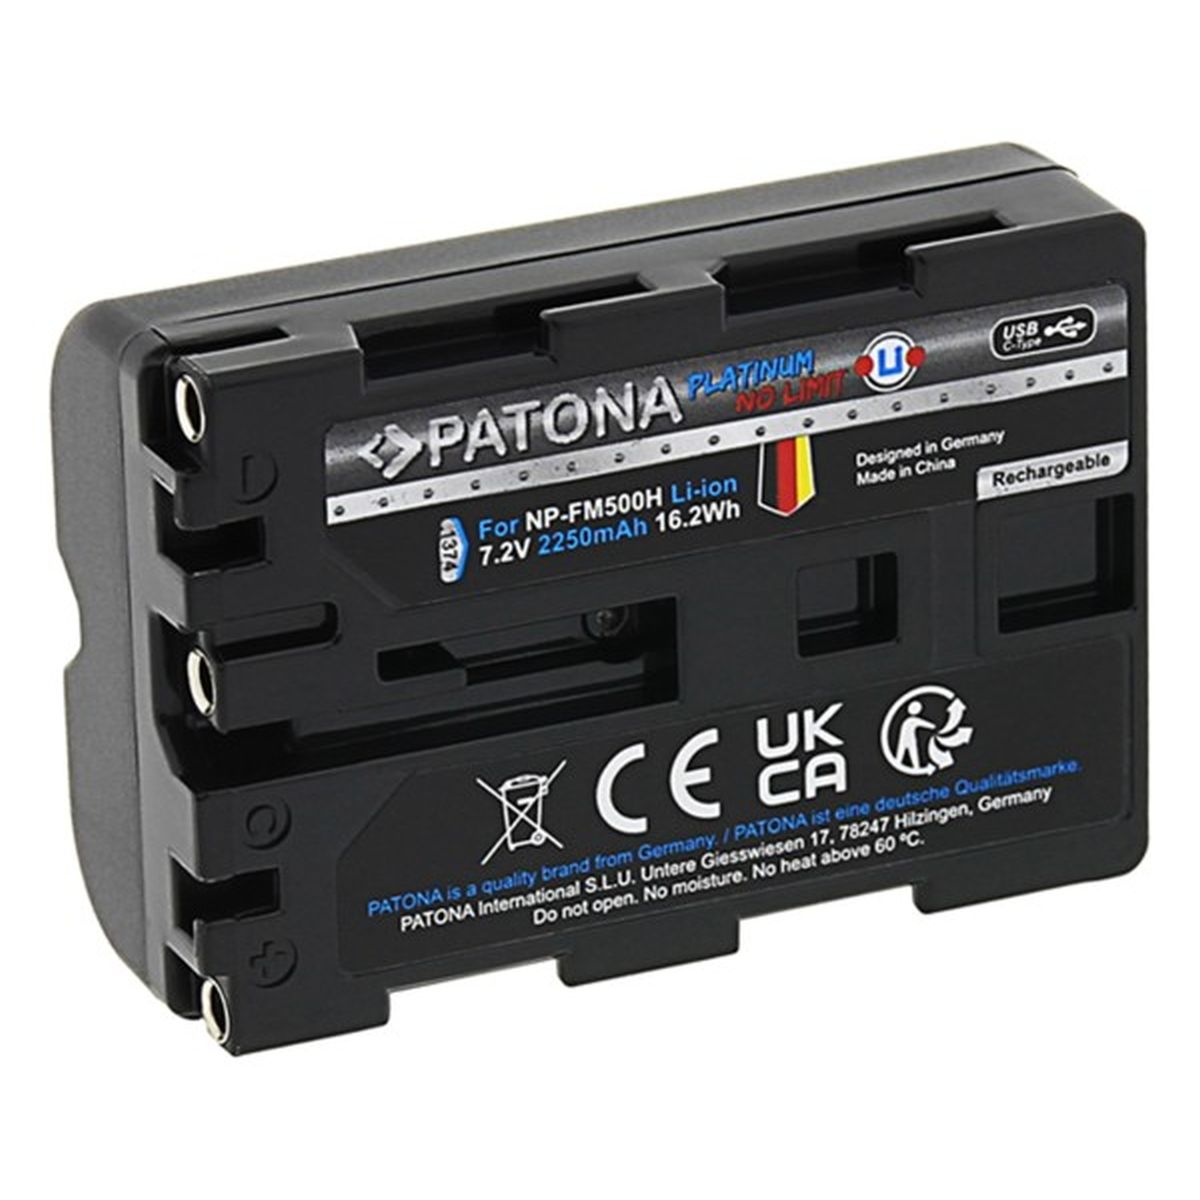 Patona Platinum Akku mit USB-C Input für Sony NP-FM500H